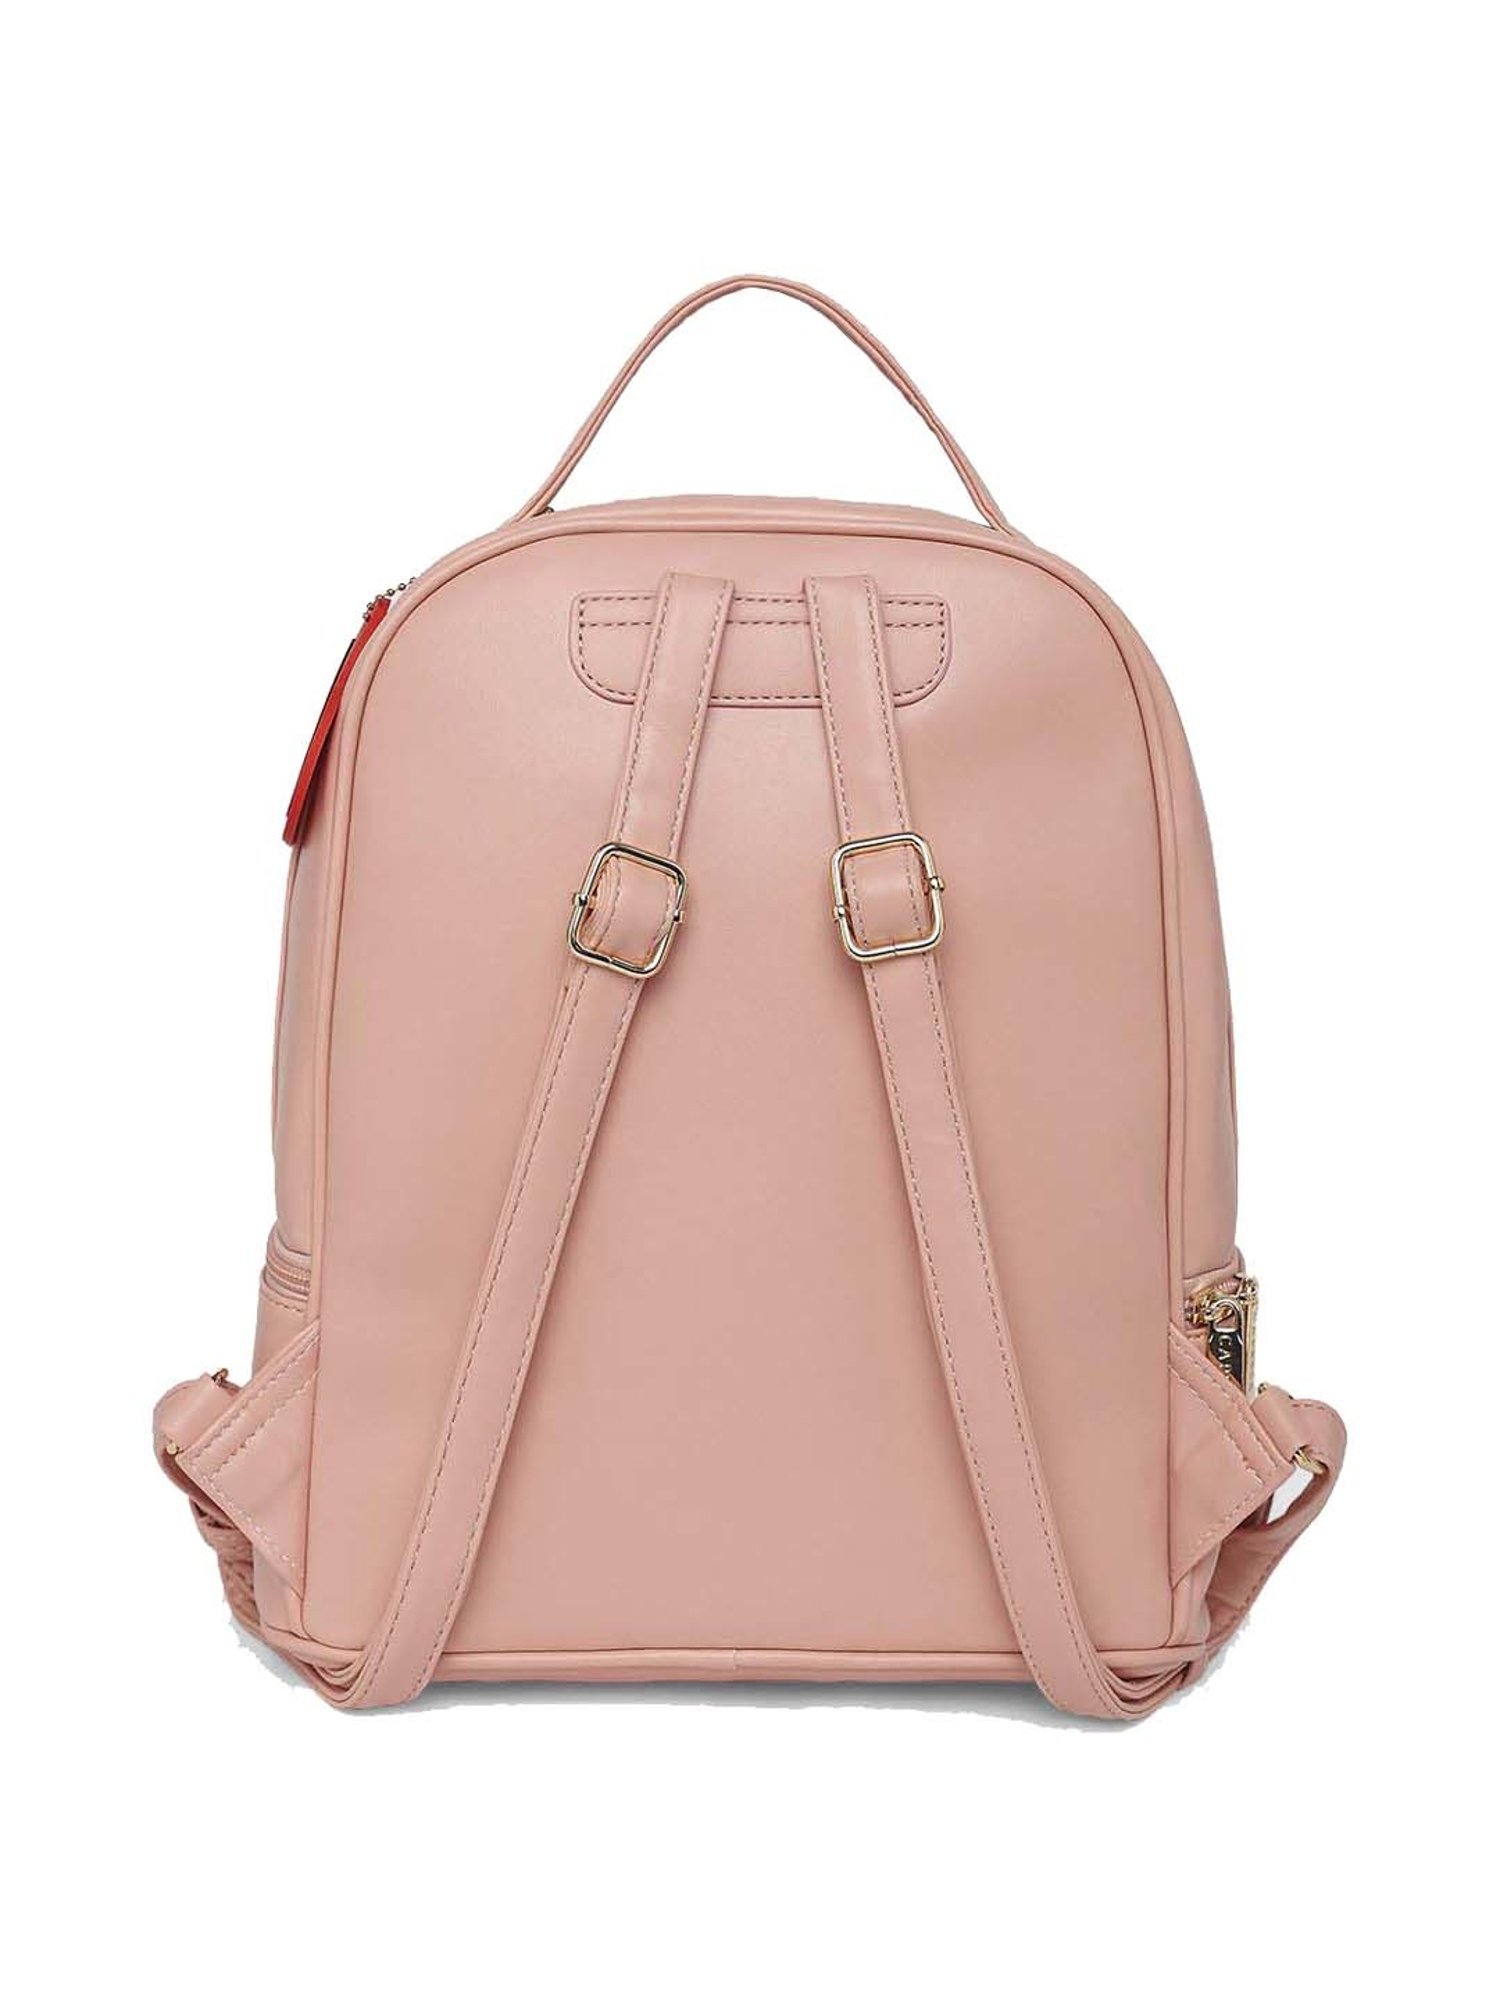 MI/KO Designer Pink Backpack Hot Sale Fashion Handbag For Women And Girls  Luxury Messenger Bag And Purse From Tian20171006, $12.19 | DHgate.Com